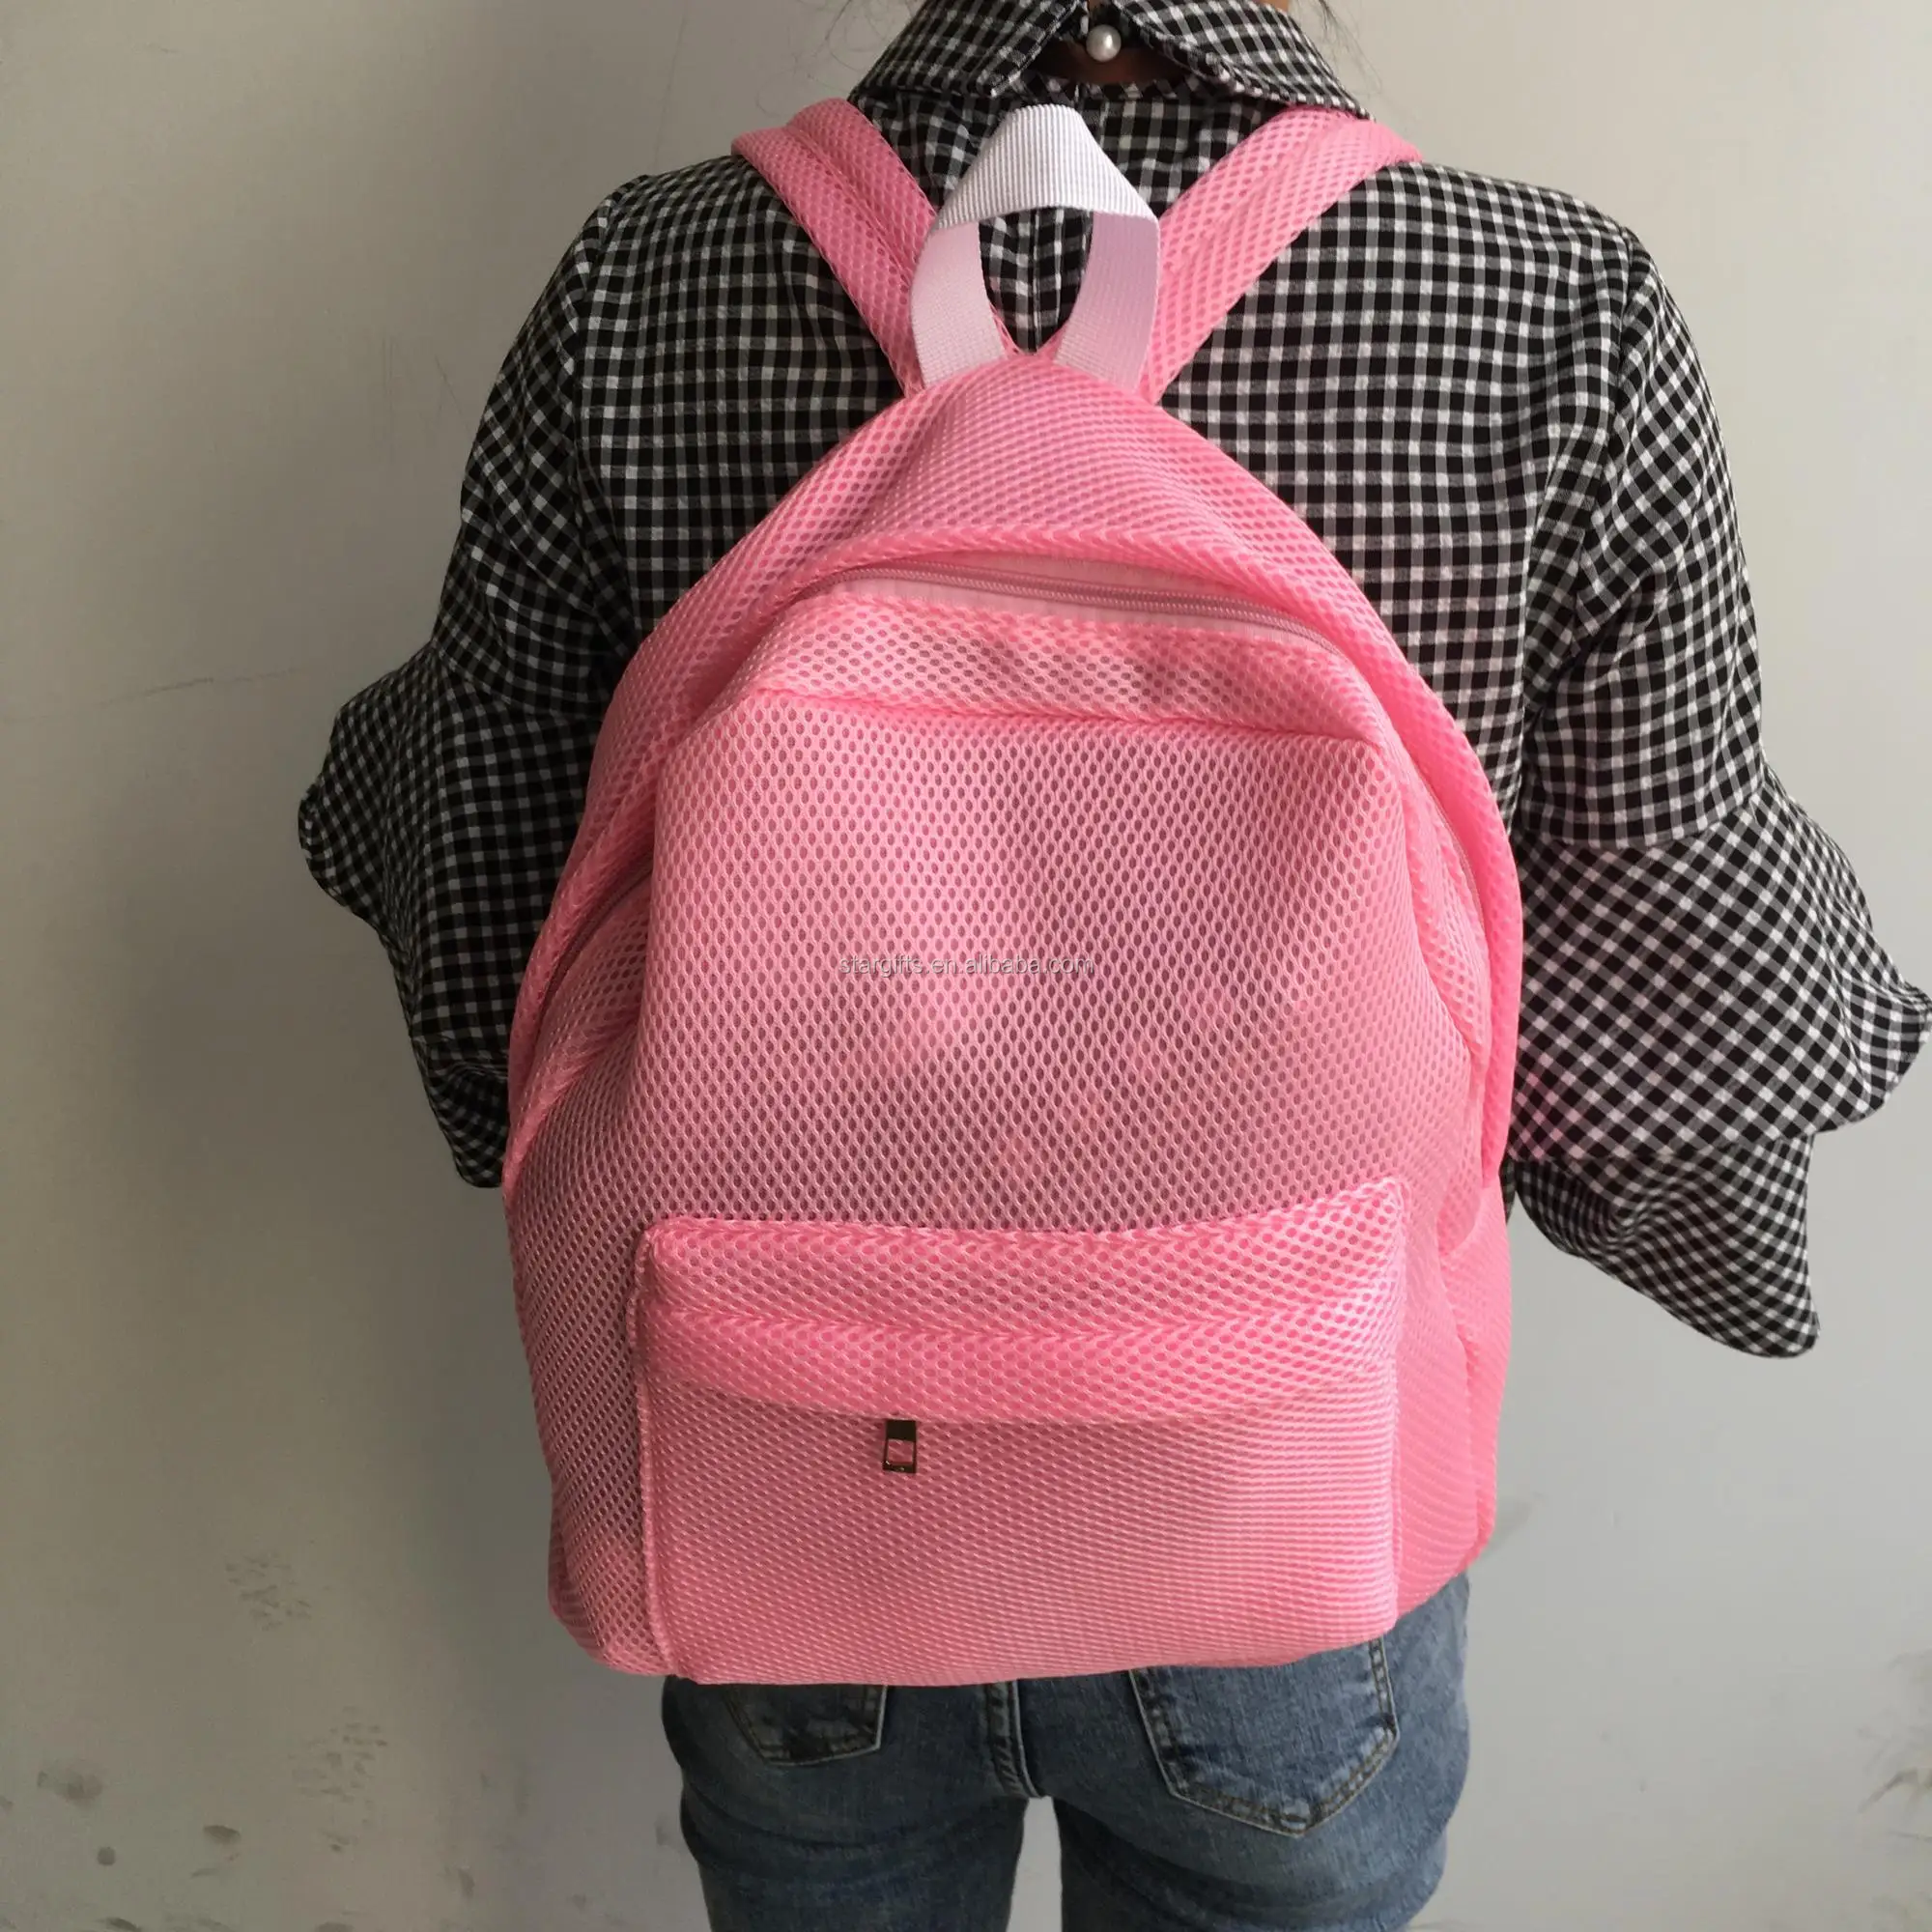 29 X 22 X 8 Cm Size Pink Cute Children Fancy School Bag - Buy School ...